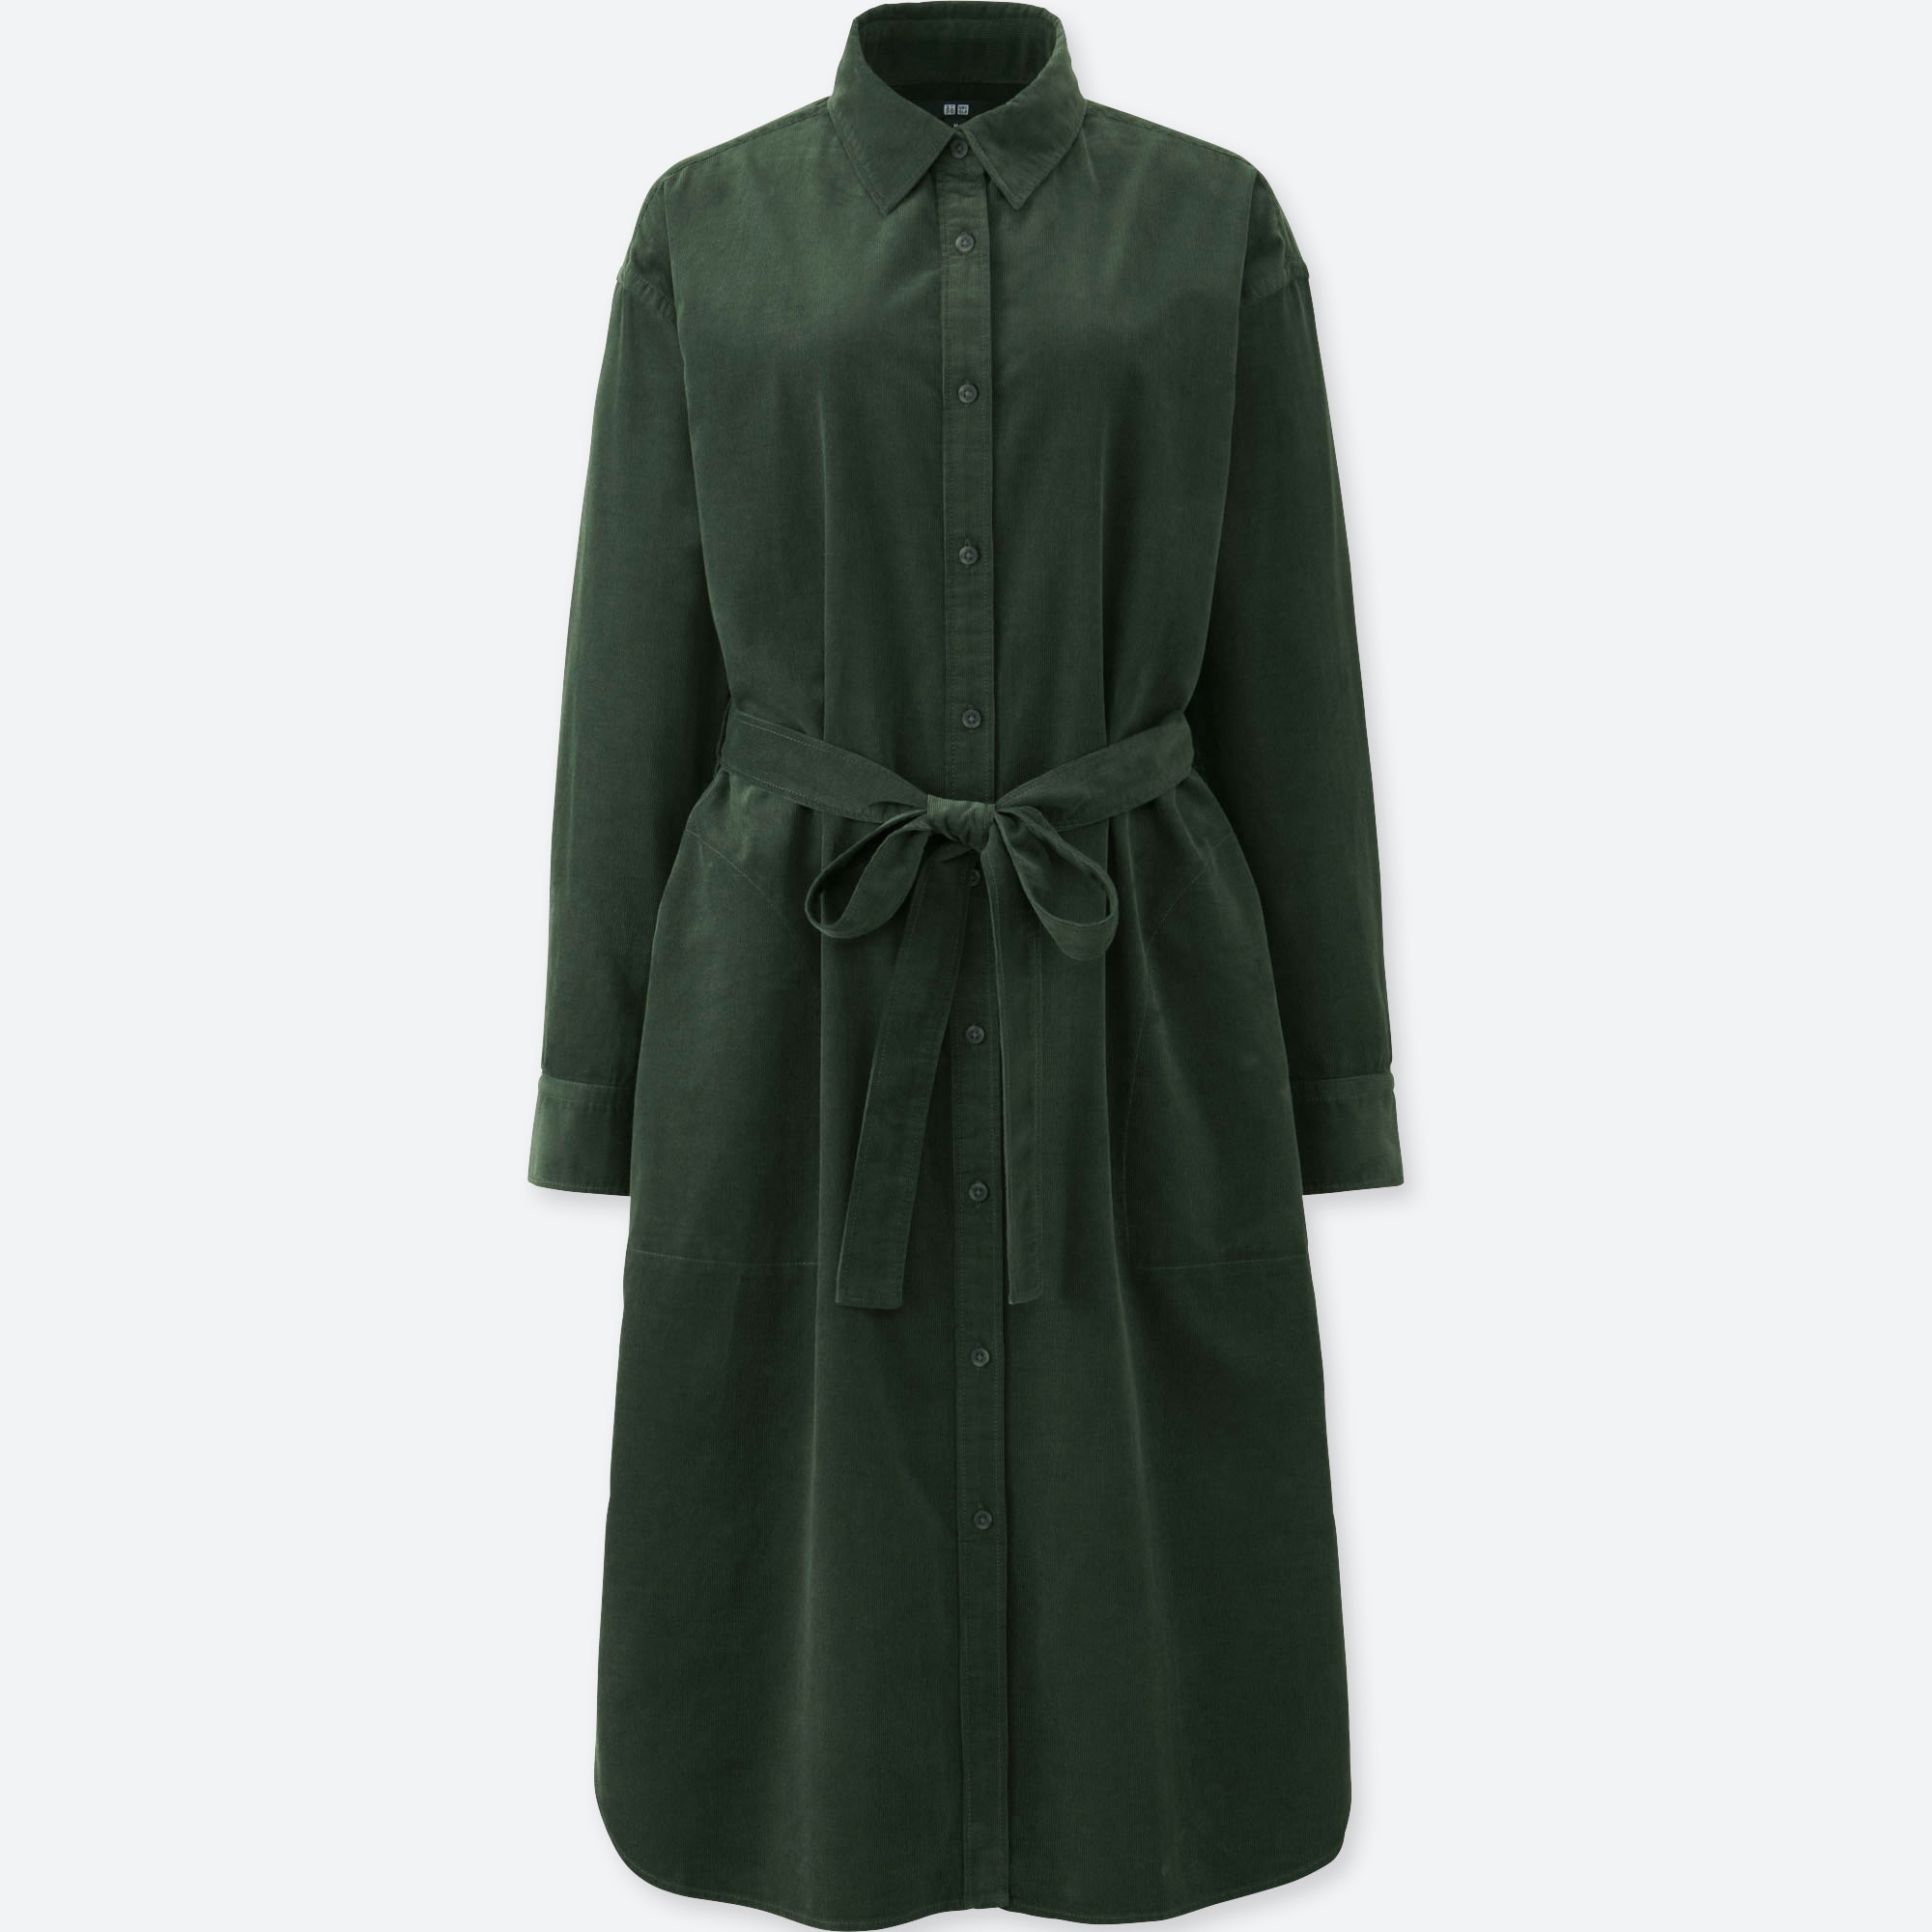 green corduroy dress